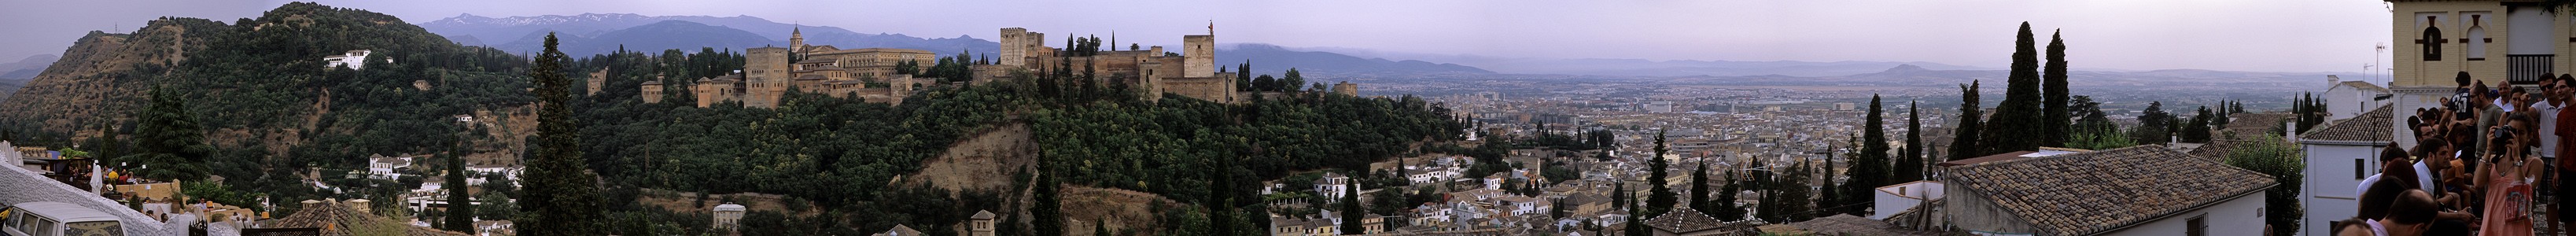 Granada Albaicín - Alhambra - Stadtzentrum - Albaicín Albaizin